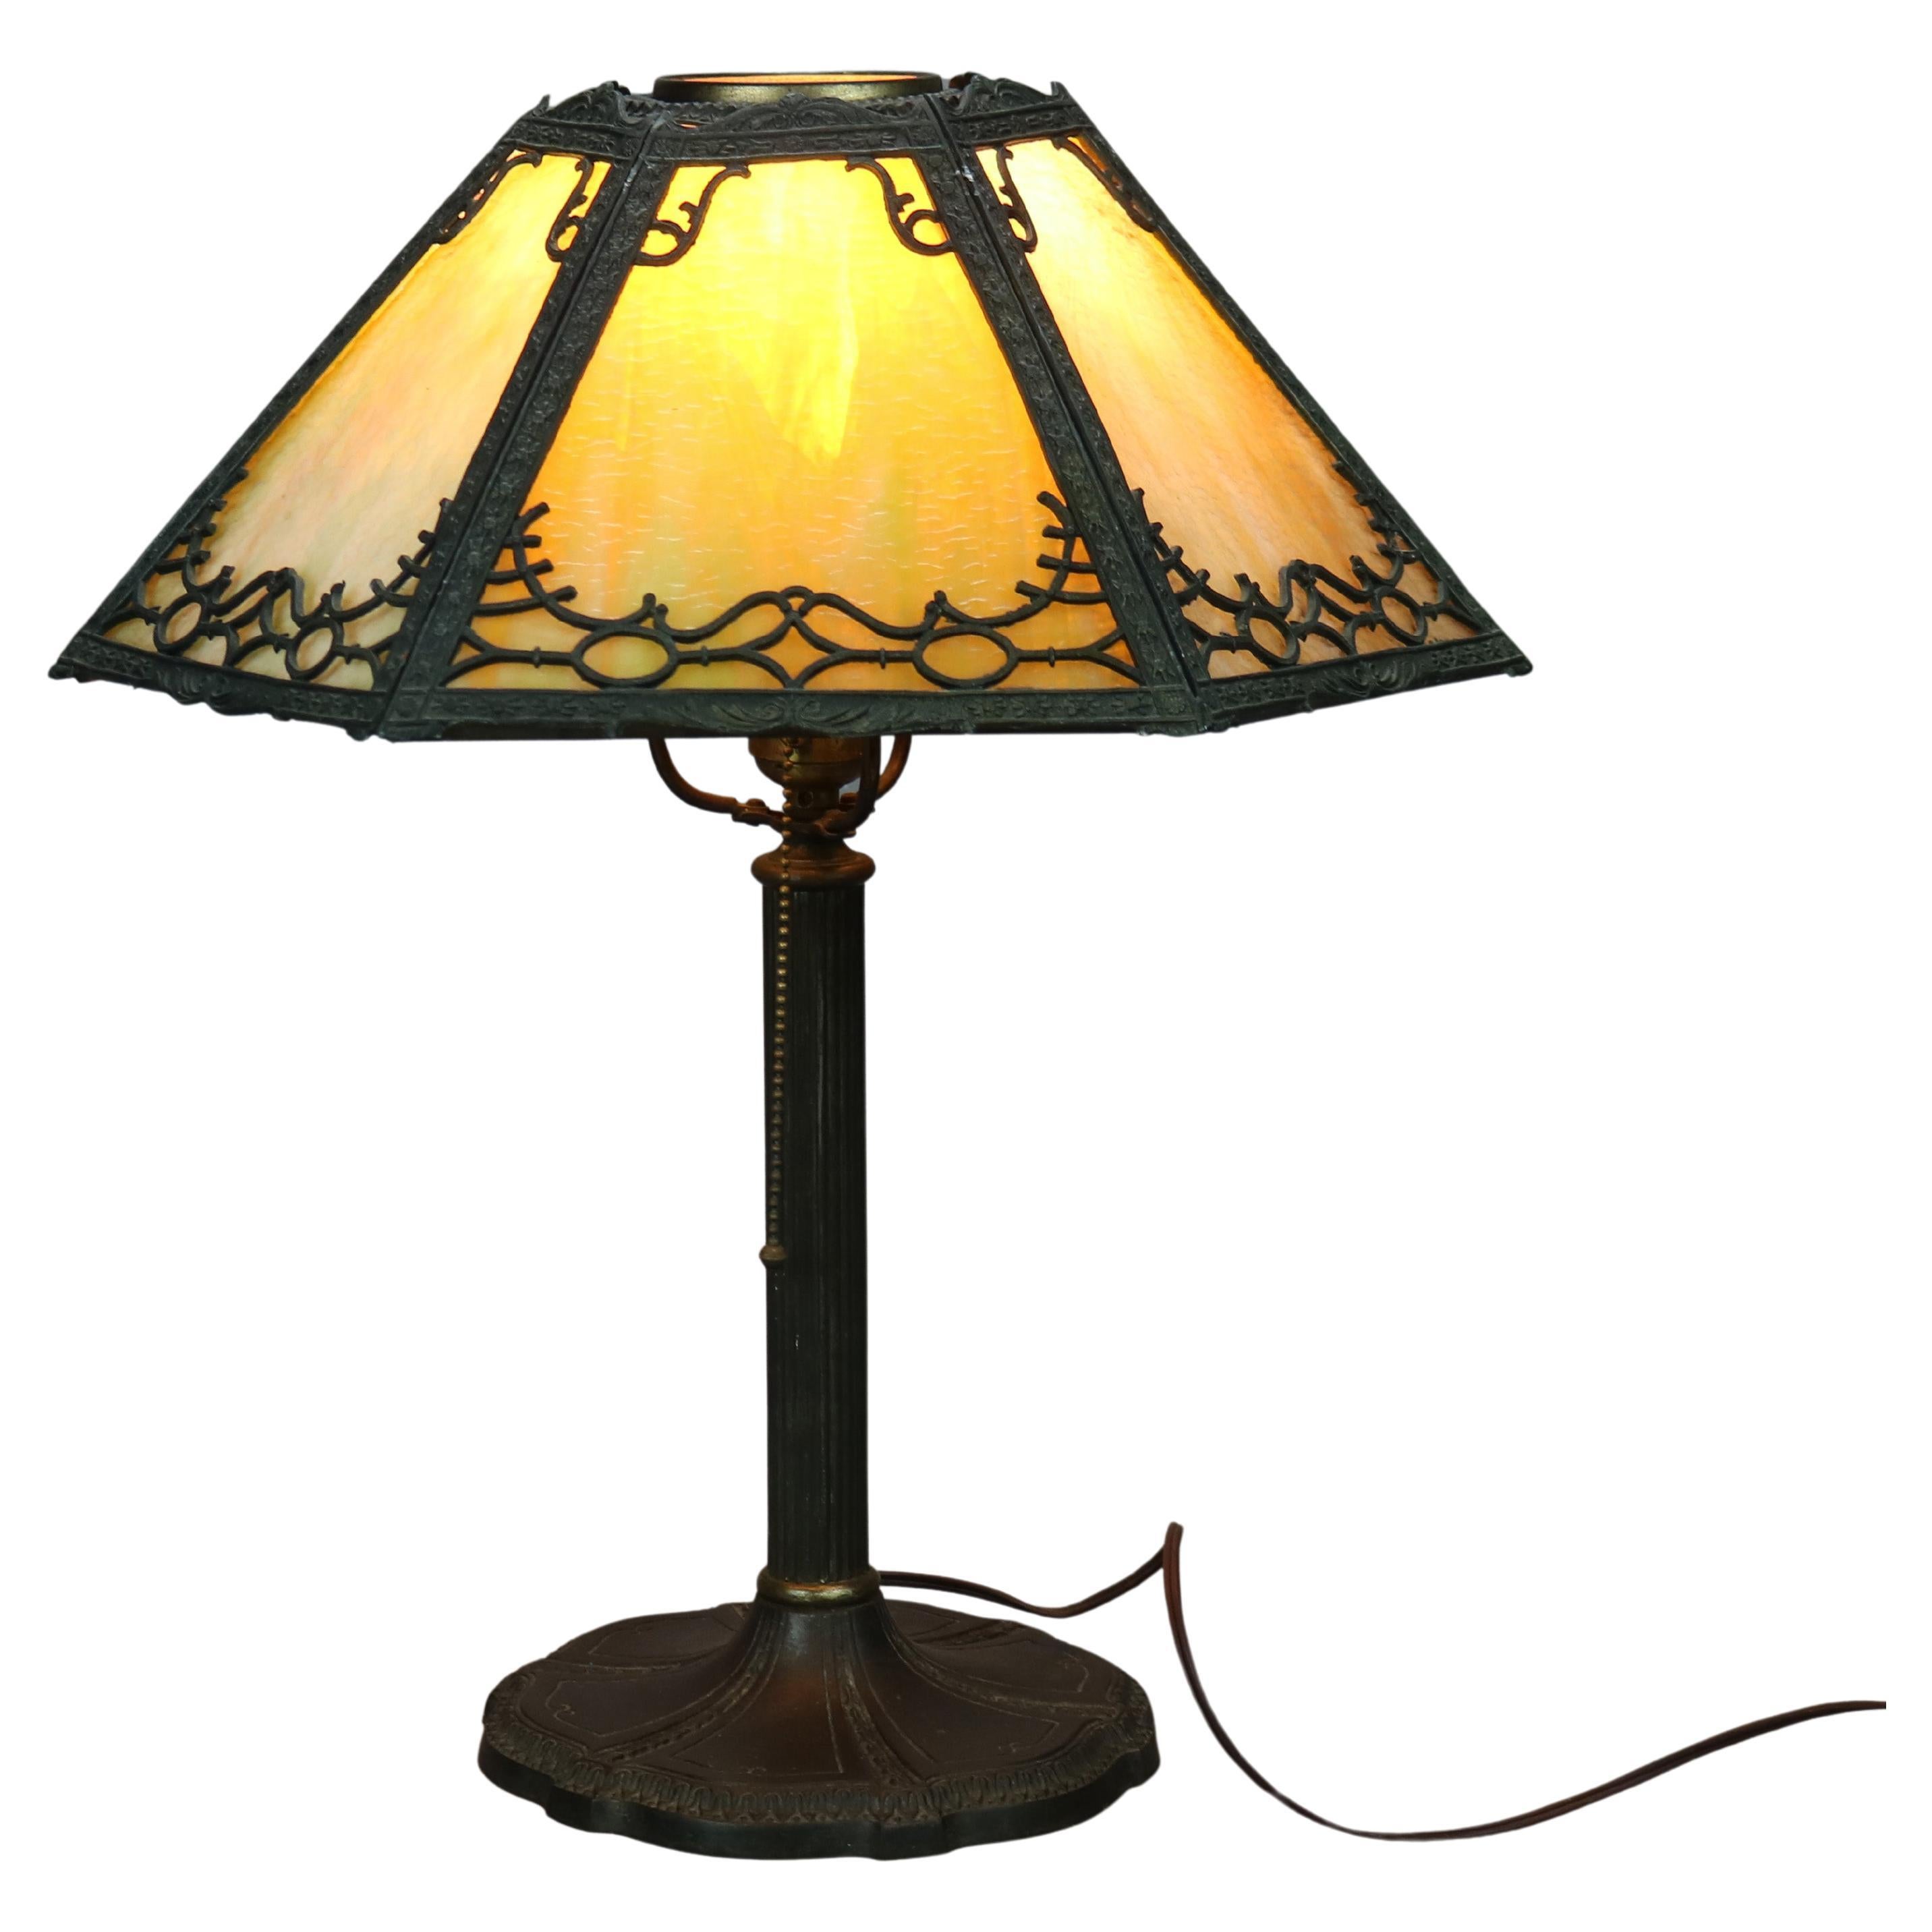 Antique Arts & Crafts Miller Lamp Co. Slag Glass Table Lamp circa 1920